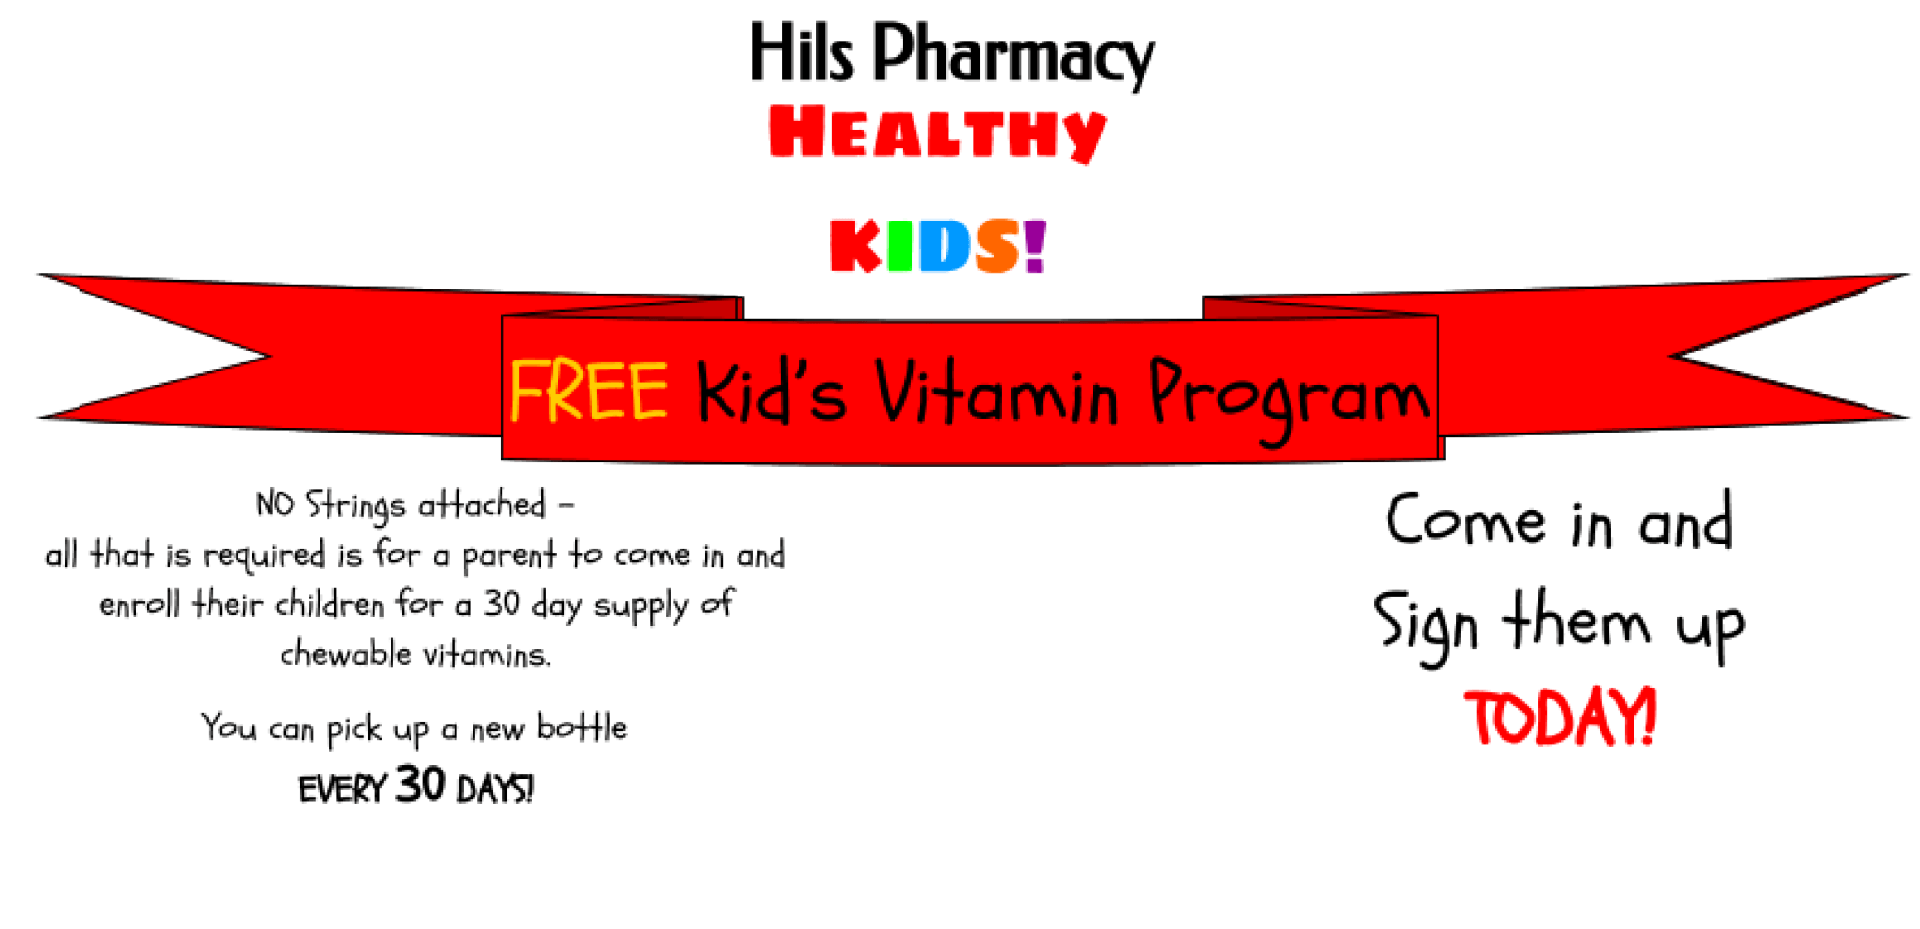 Free Kid's Vitamin Program | Hils Pharmacy